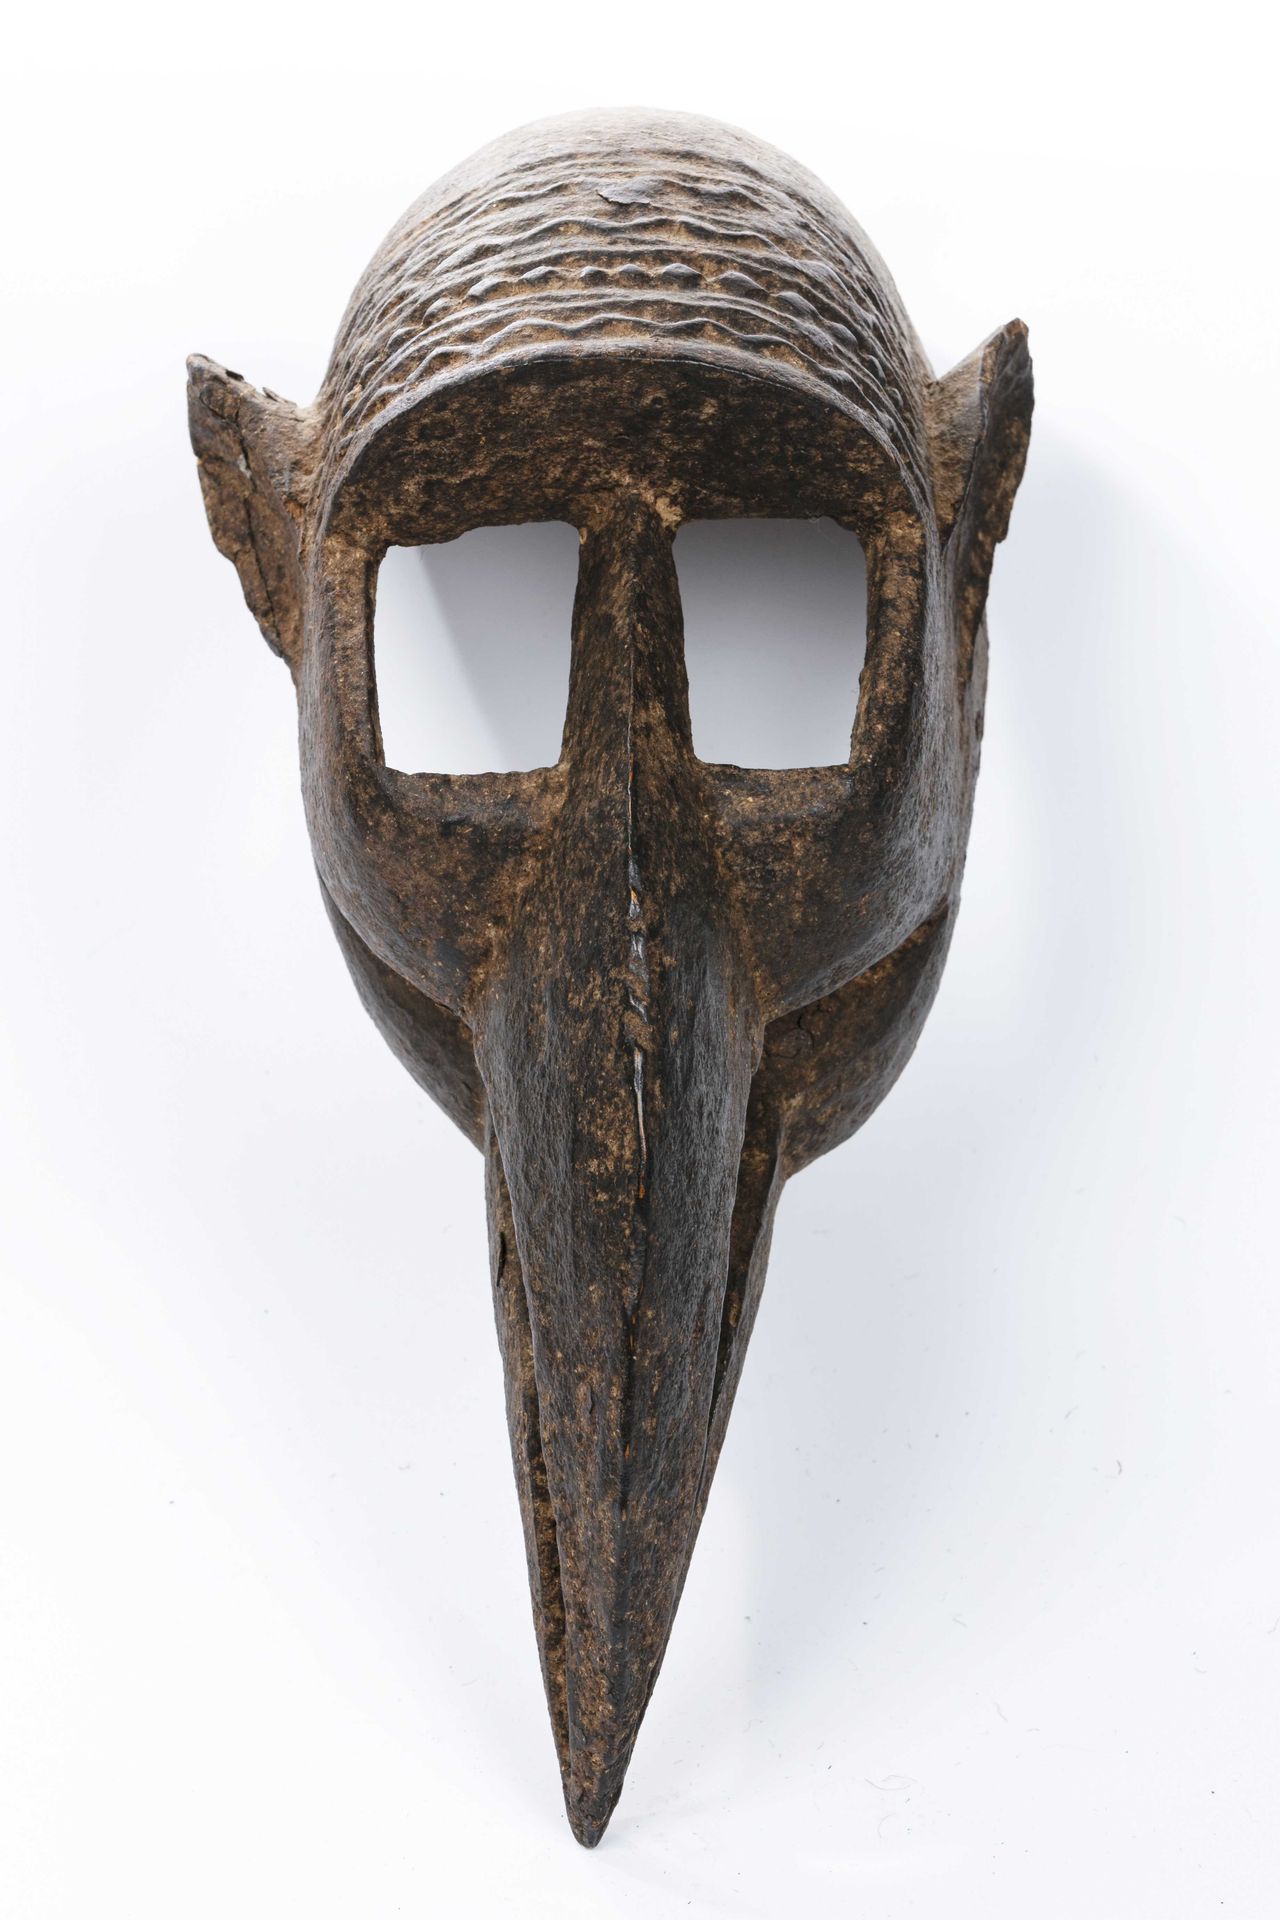 Null Dogon style mask 
Mali 
Wood
Height : 46 cm
Zoomorphic mask, with schematiz&hellip;